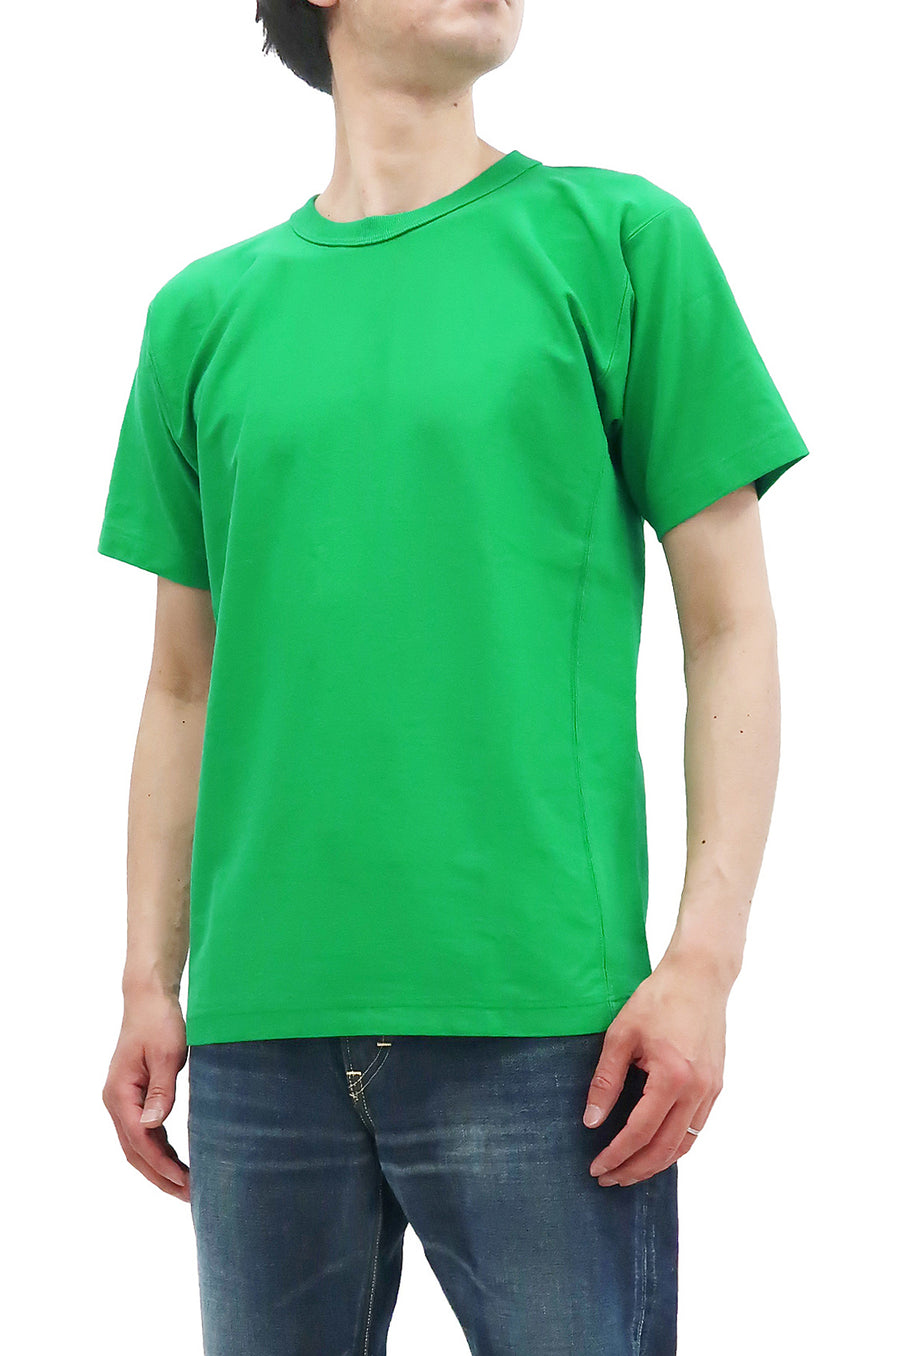 Whitesvill Plain T-shirt with Rib Side Panels Men's Heavyweight Short Sleeve Tee WV78930 144 Kelly-Green